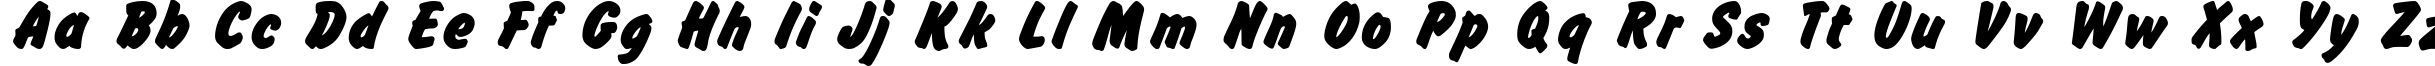 Пример написания английского алфавита шрифтом Flash Bold